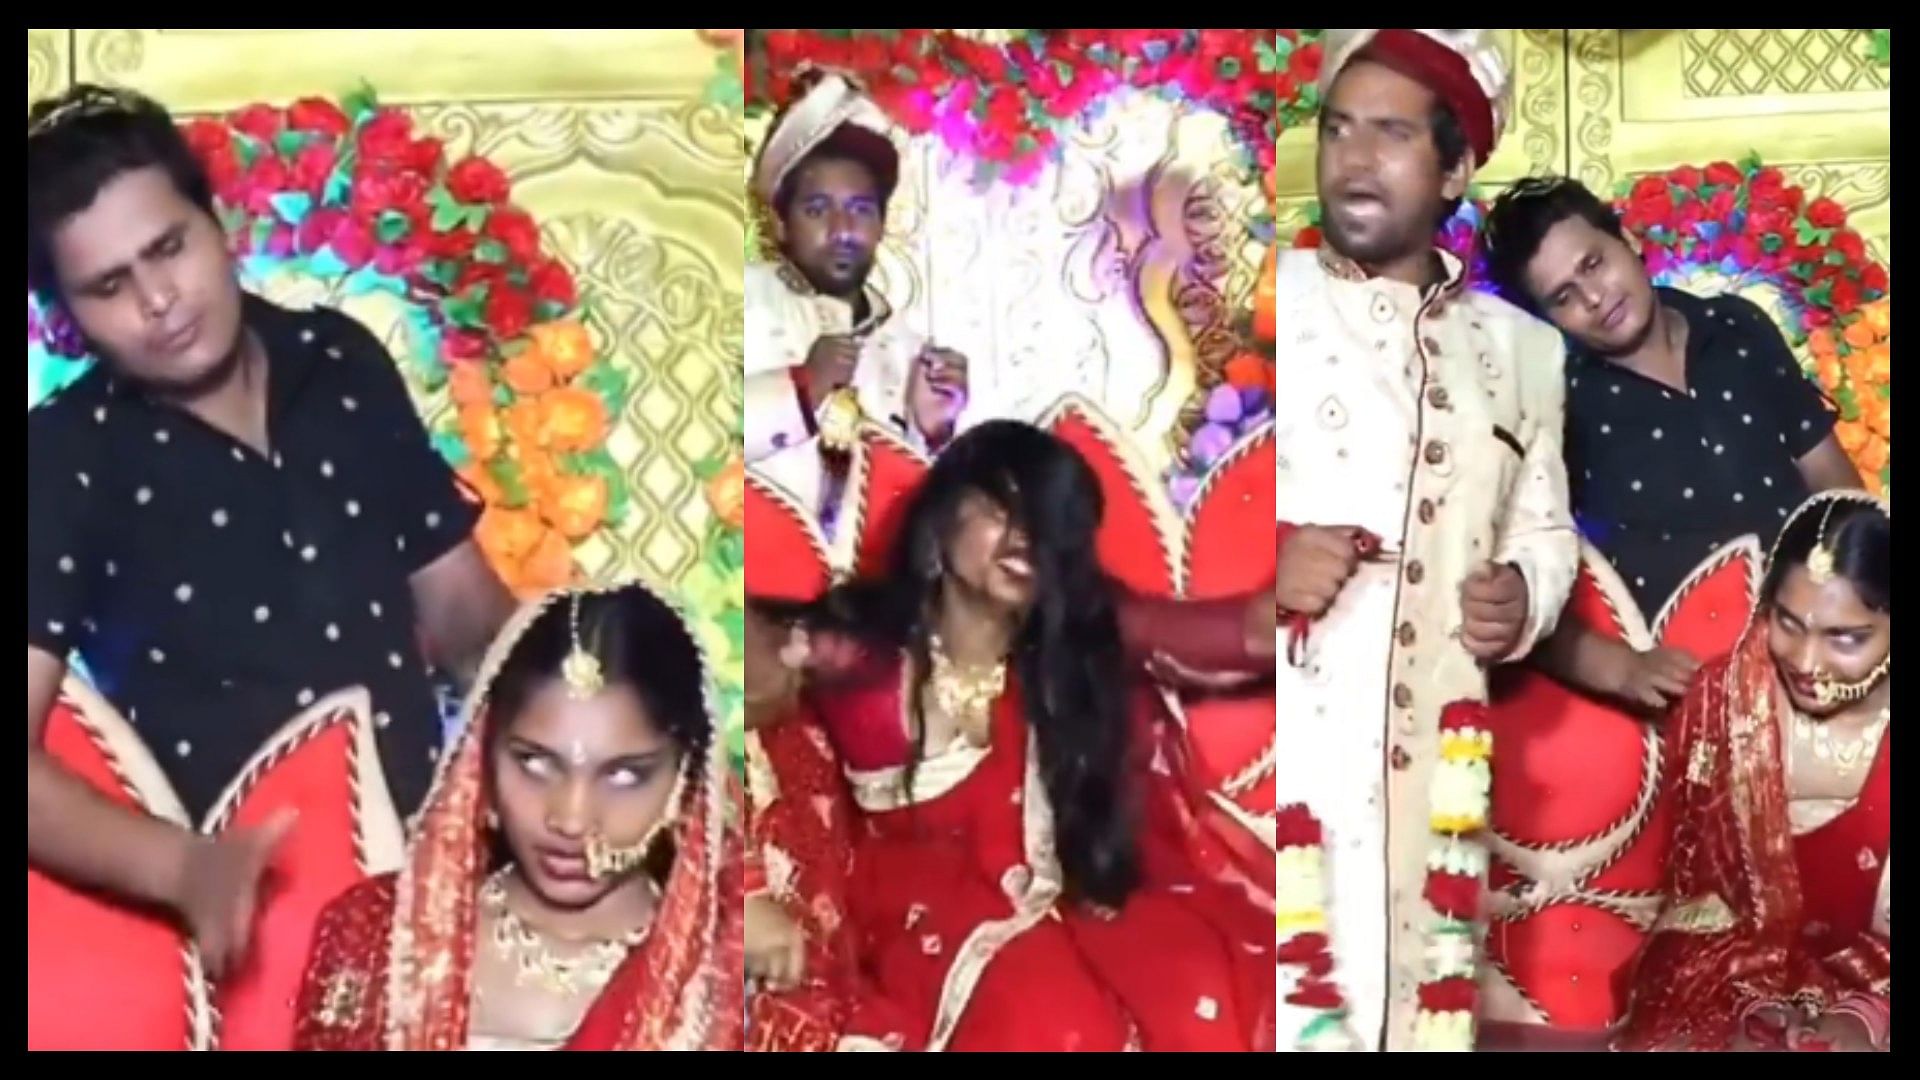 Wedding video bride turns into manjulika scaring groom video goes viral on social media